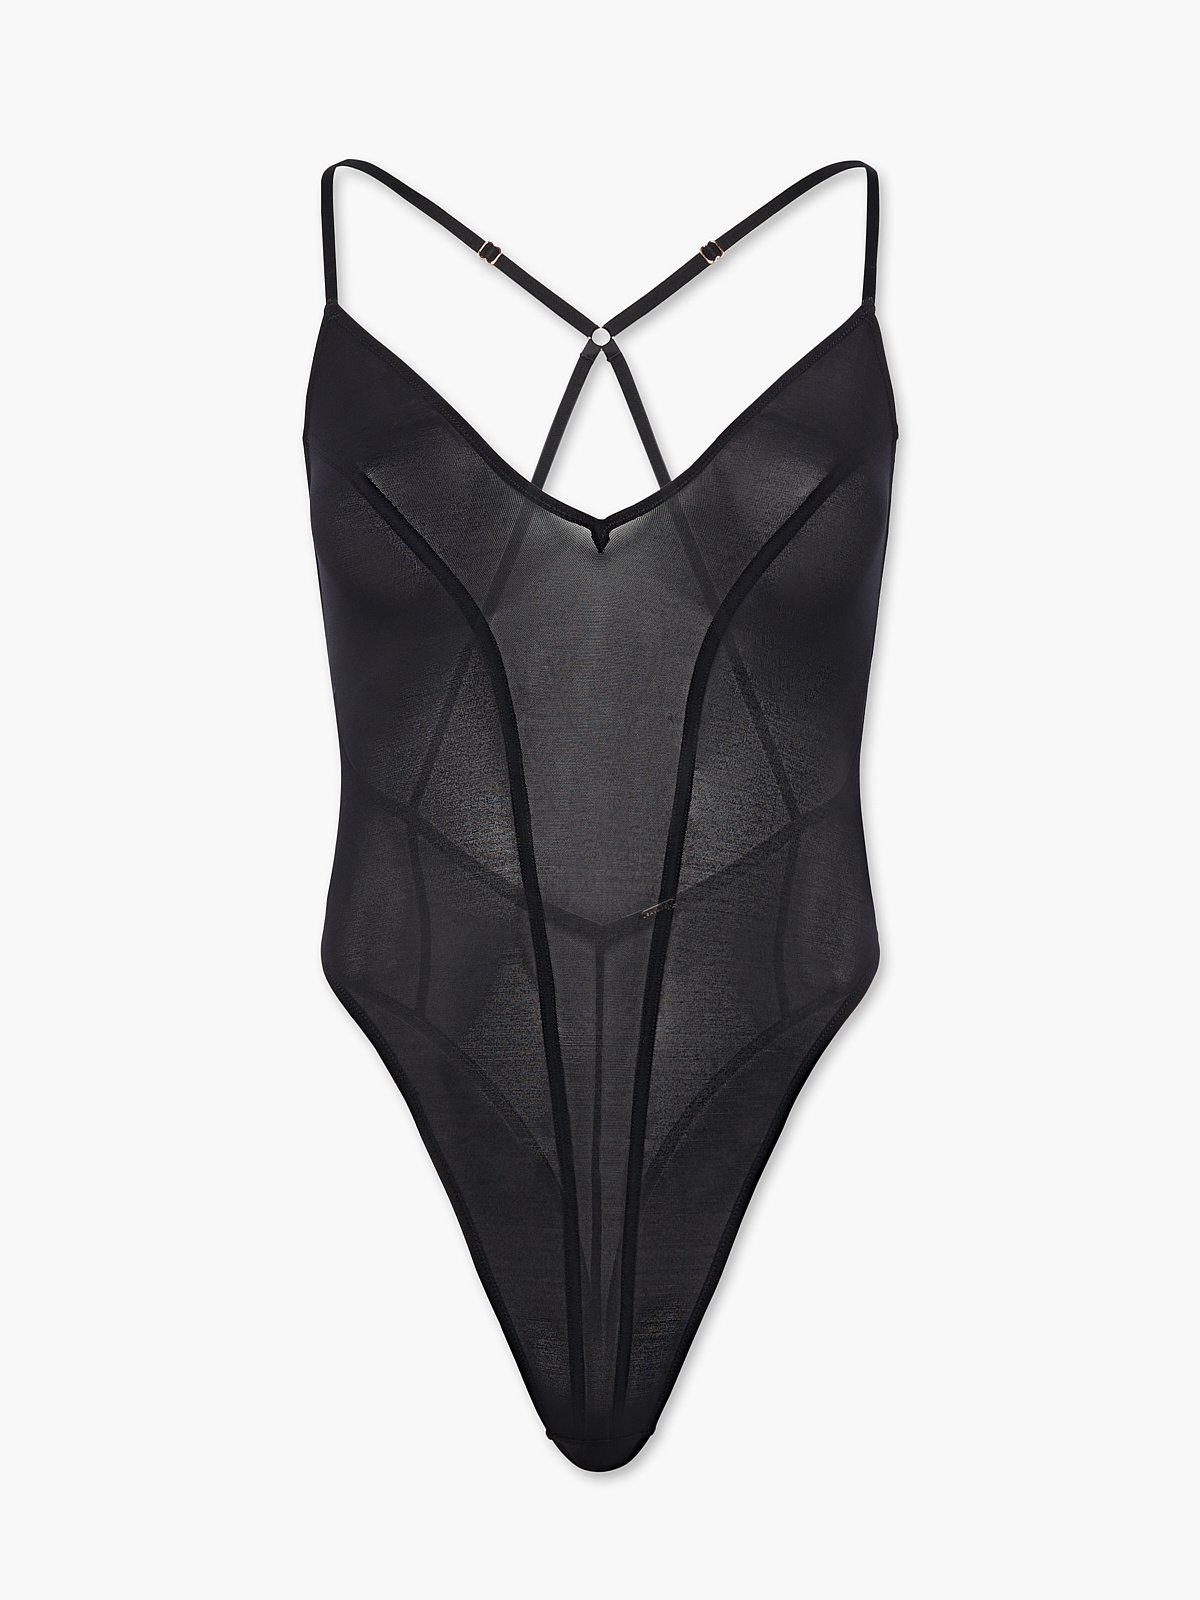 Intimates & Sleepwear, New Tik Tok Snatch Body Suit Black Size Medium